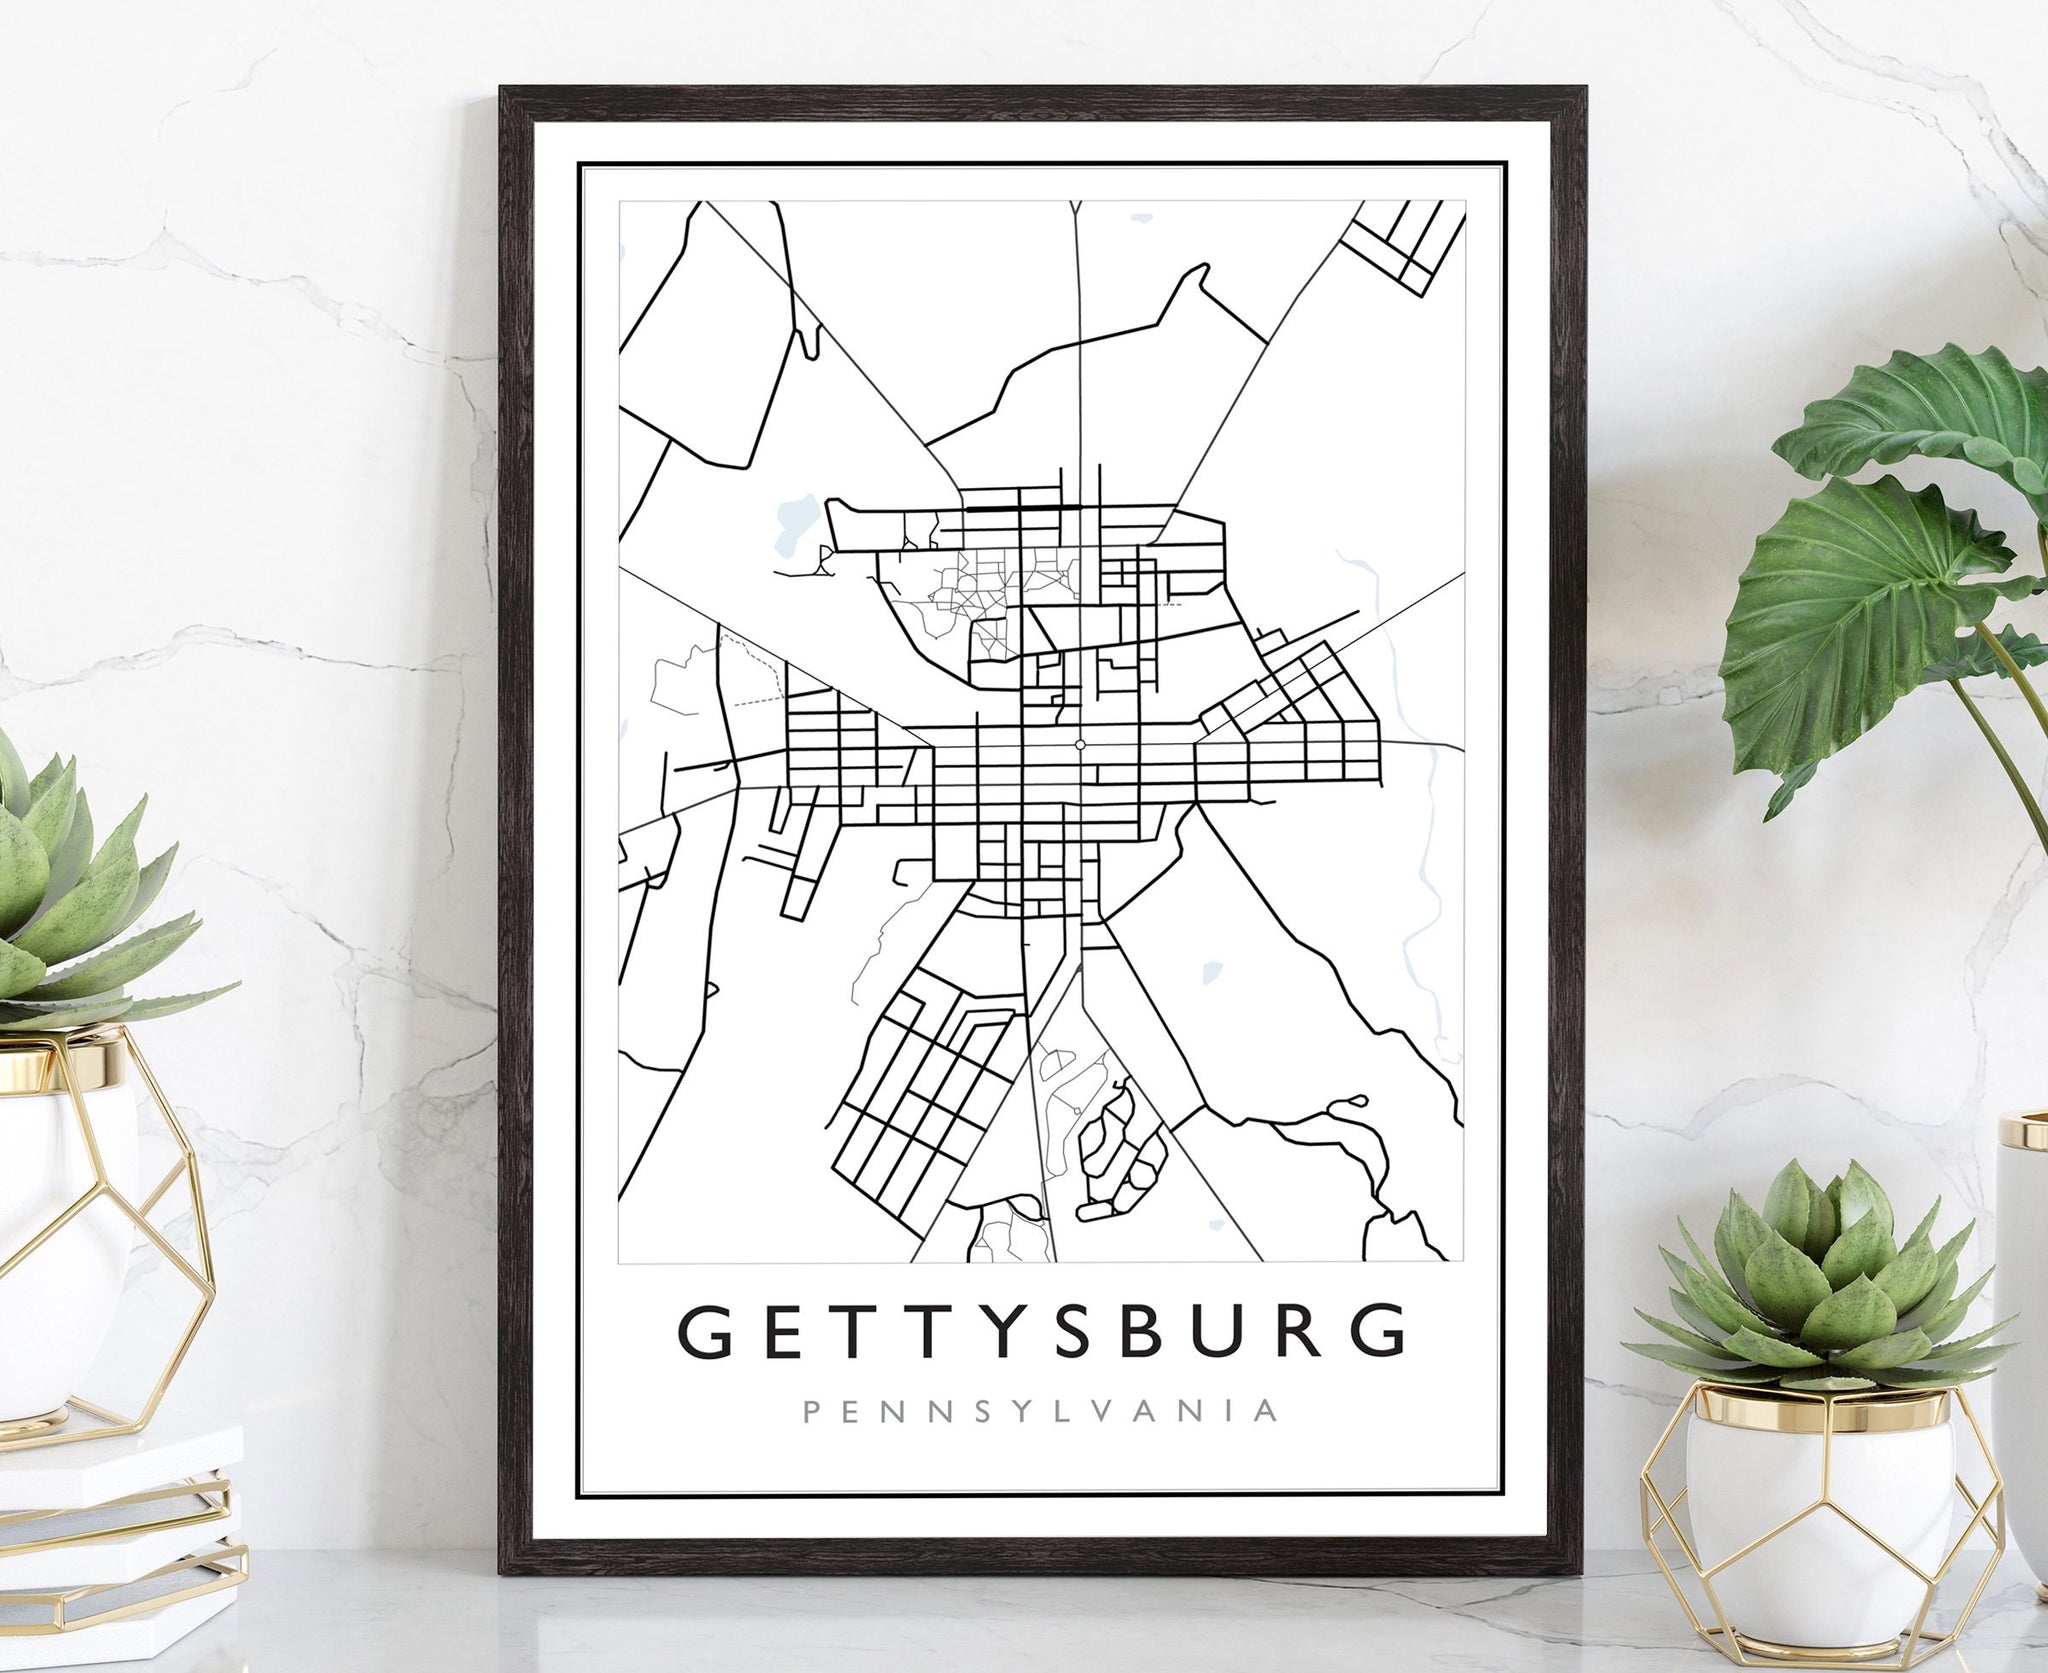 Gettysburg Pennsylvania City Map, City Road Map Poster, City Street Map Print, Modern US City Map, Home Art Decoration, Office Wall Art